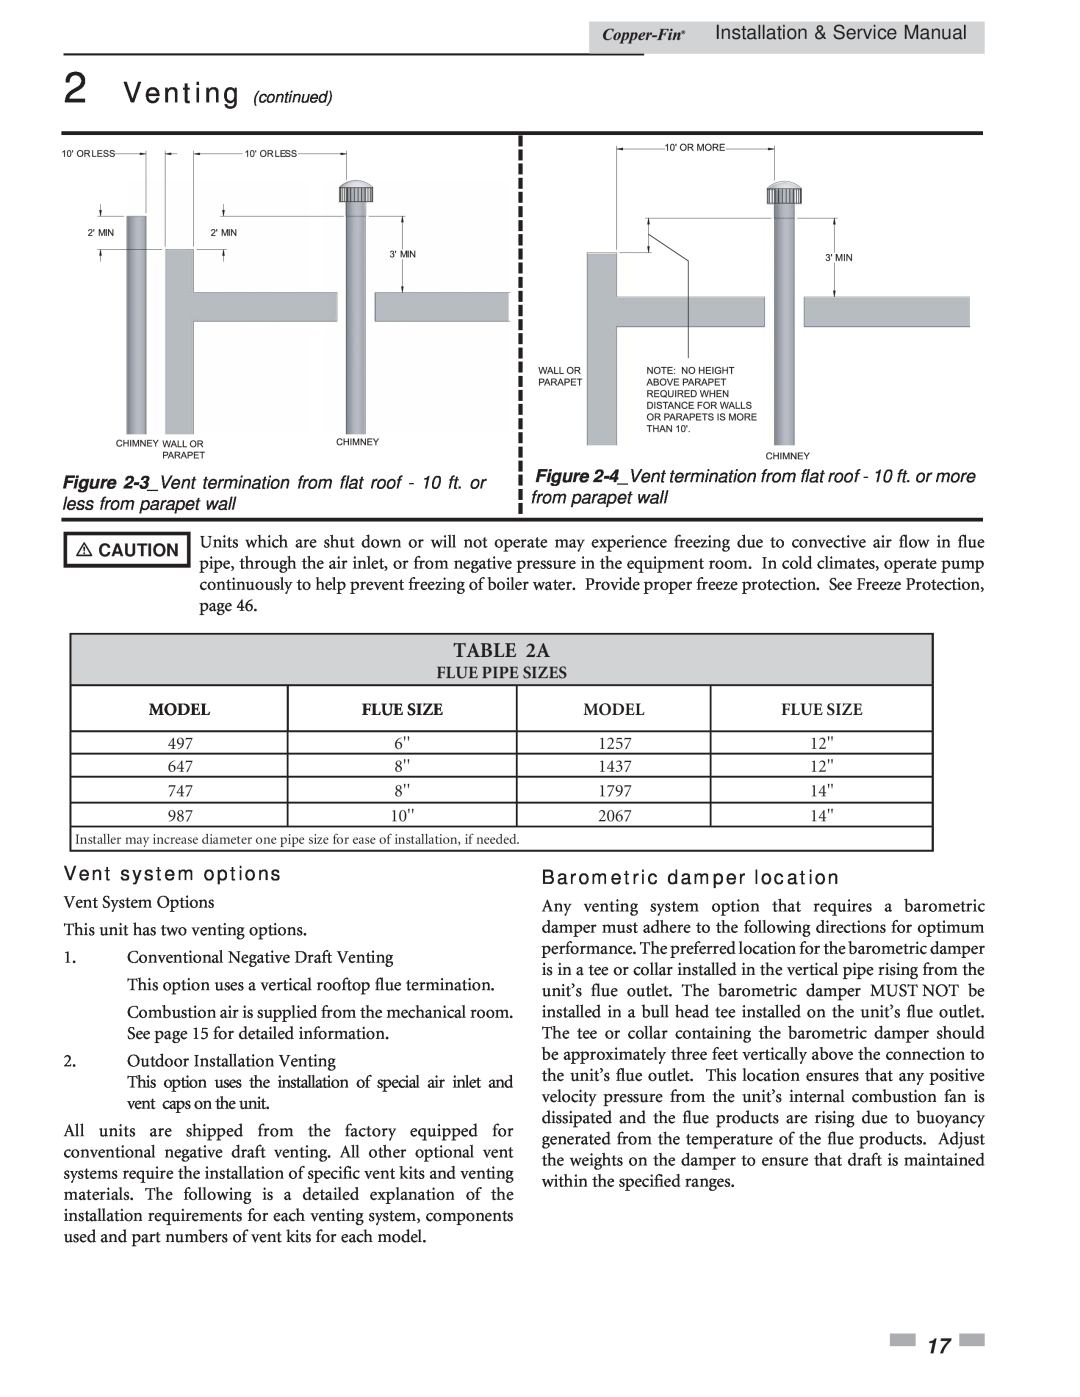 Lochinvar 497 - 2067 service manual A, Vent system options, Barometric damper location 